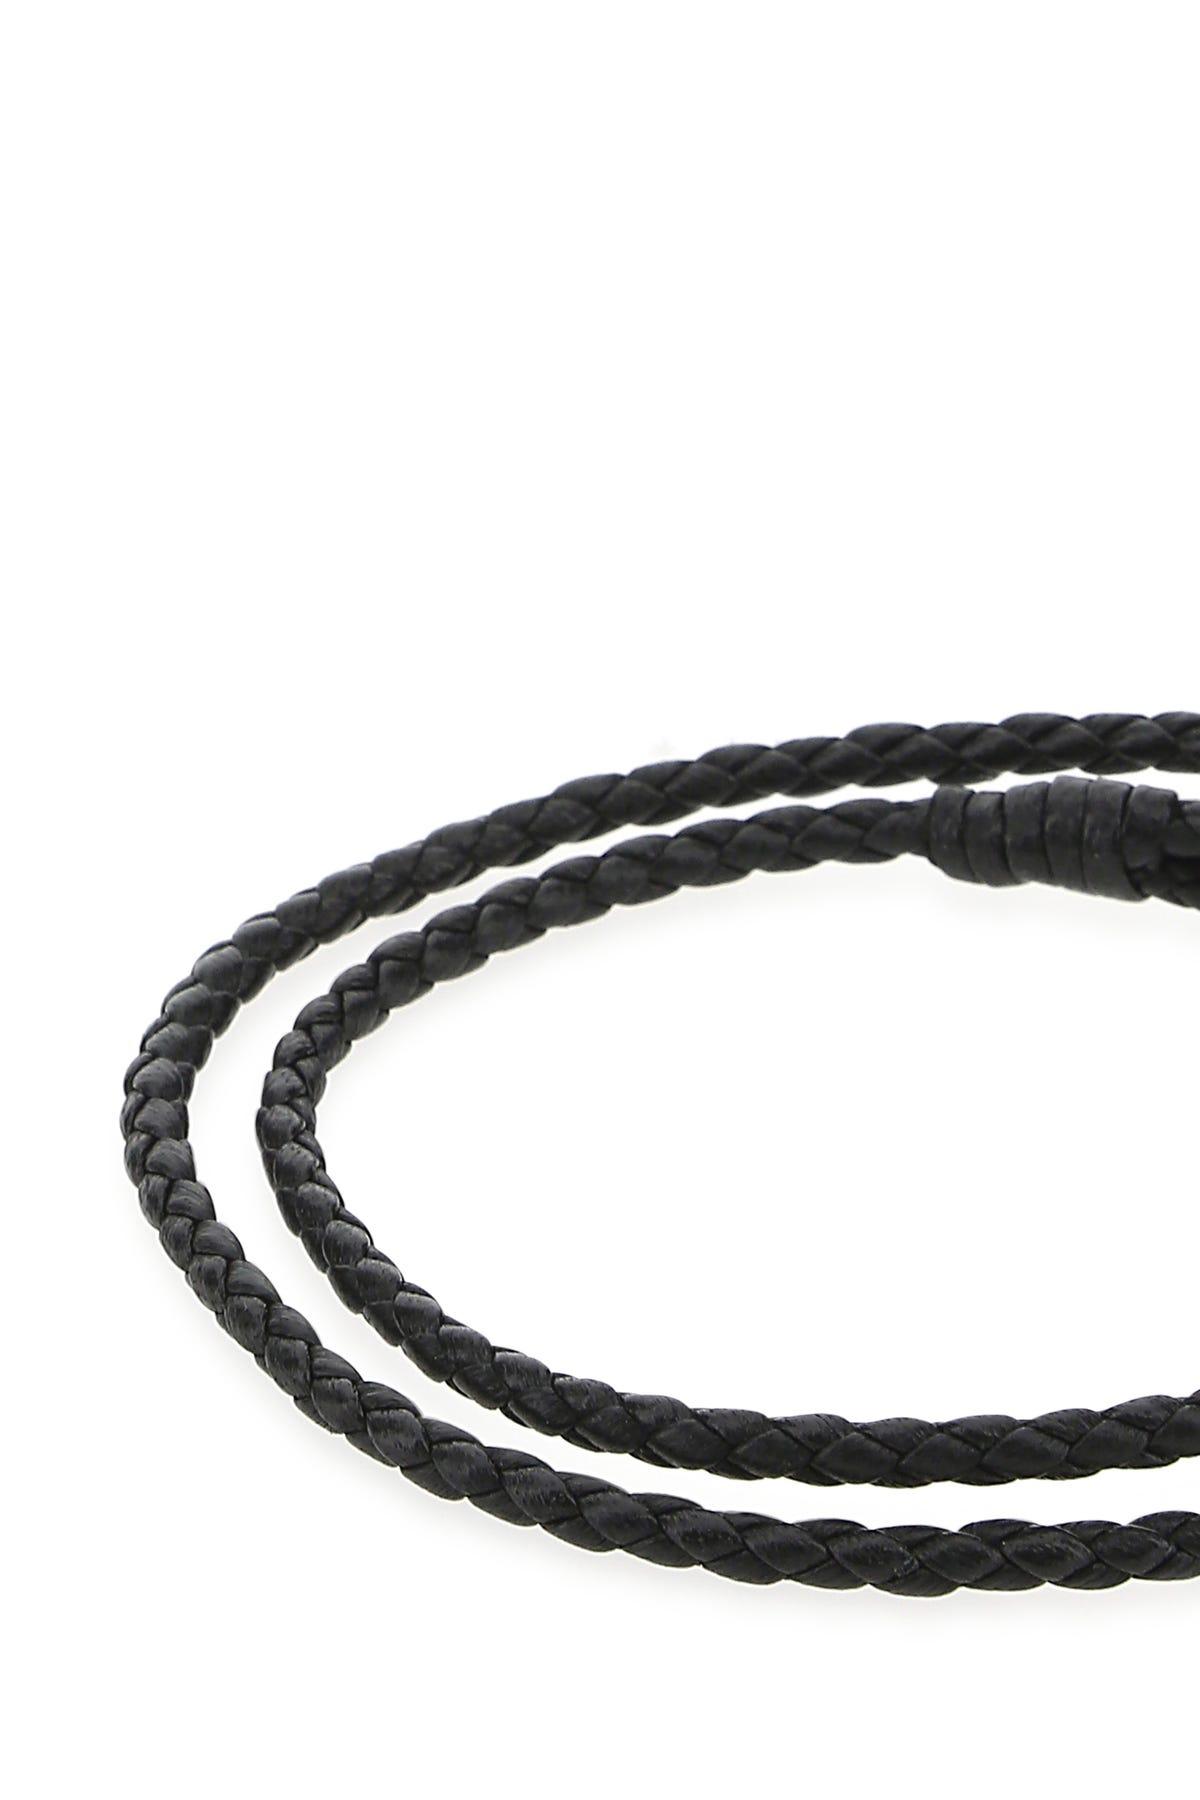 Tom Ford Woven Leather Bracelet - Black